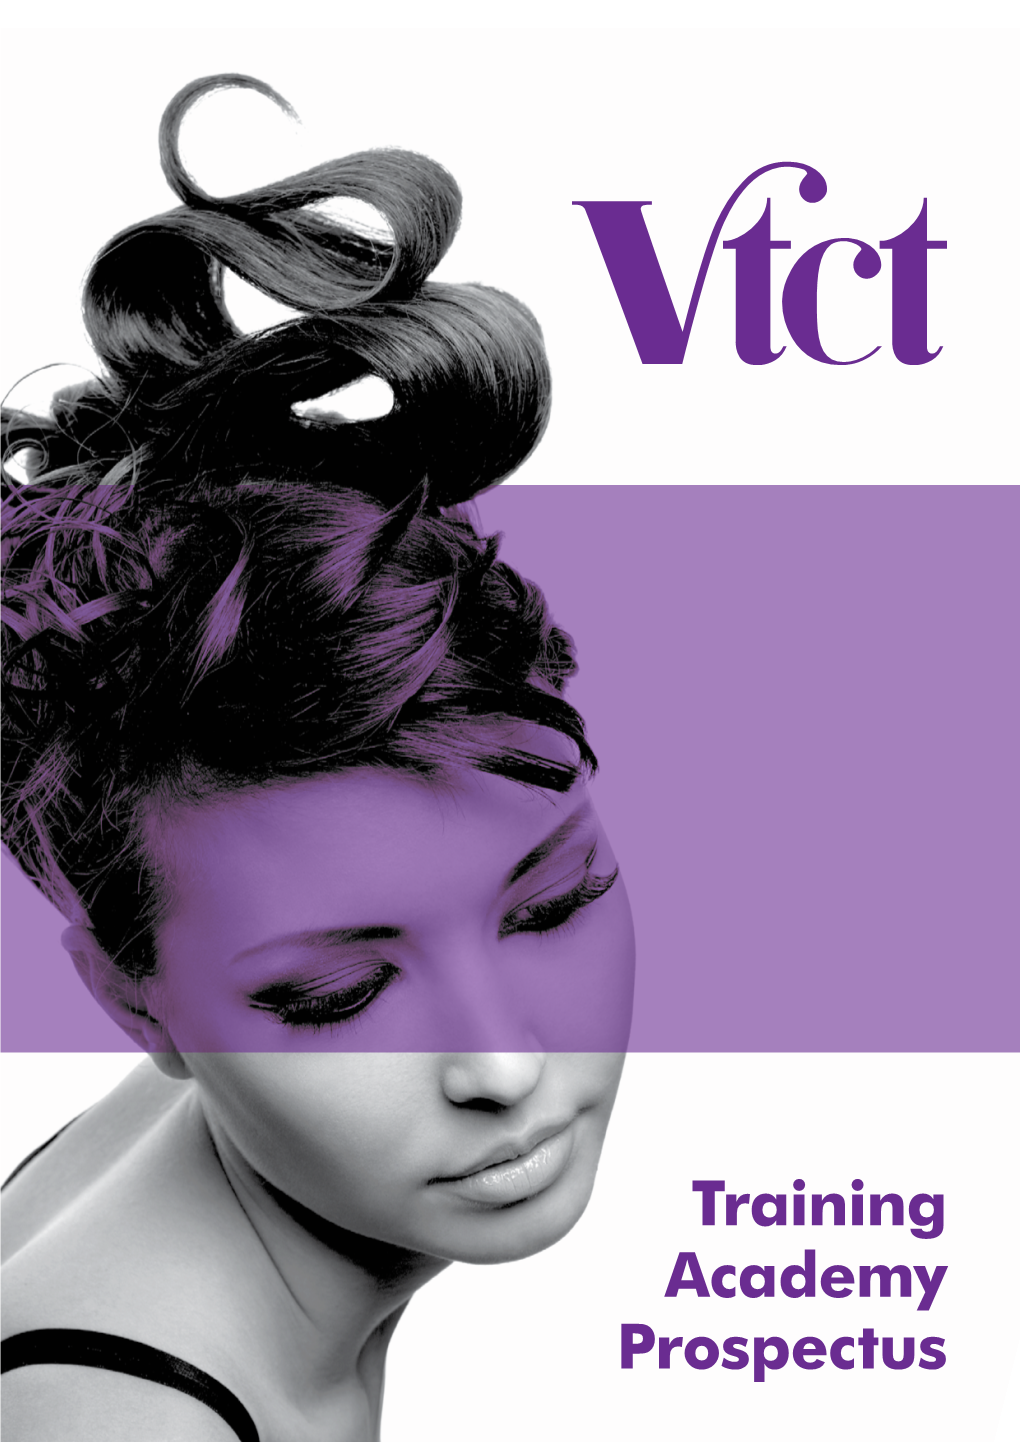 Training Academy Prospectus VTCT Training Academy Prospectus VTCT Training Academy Prospectus